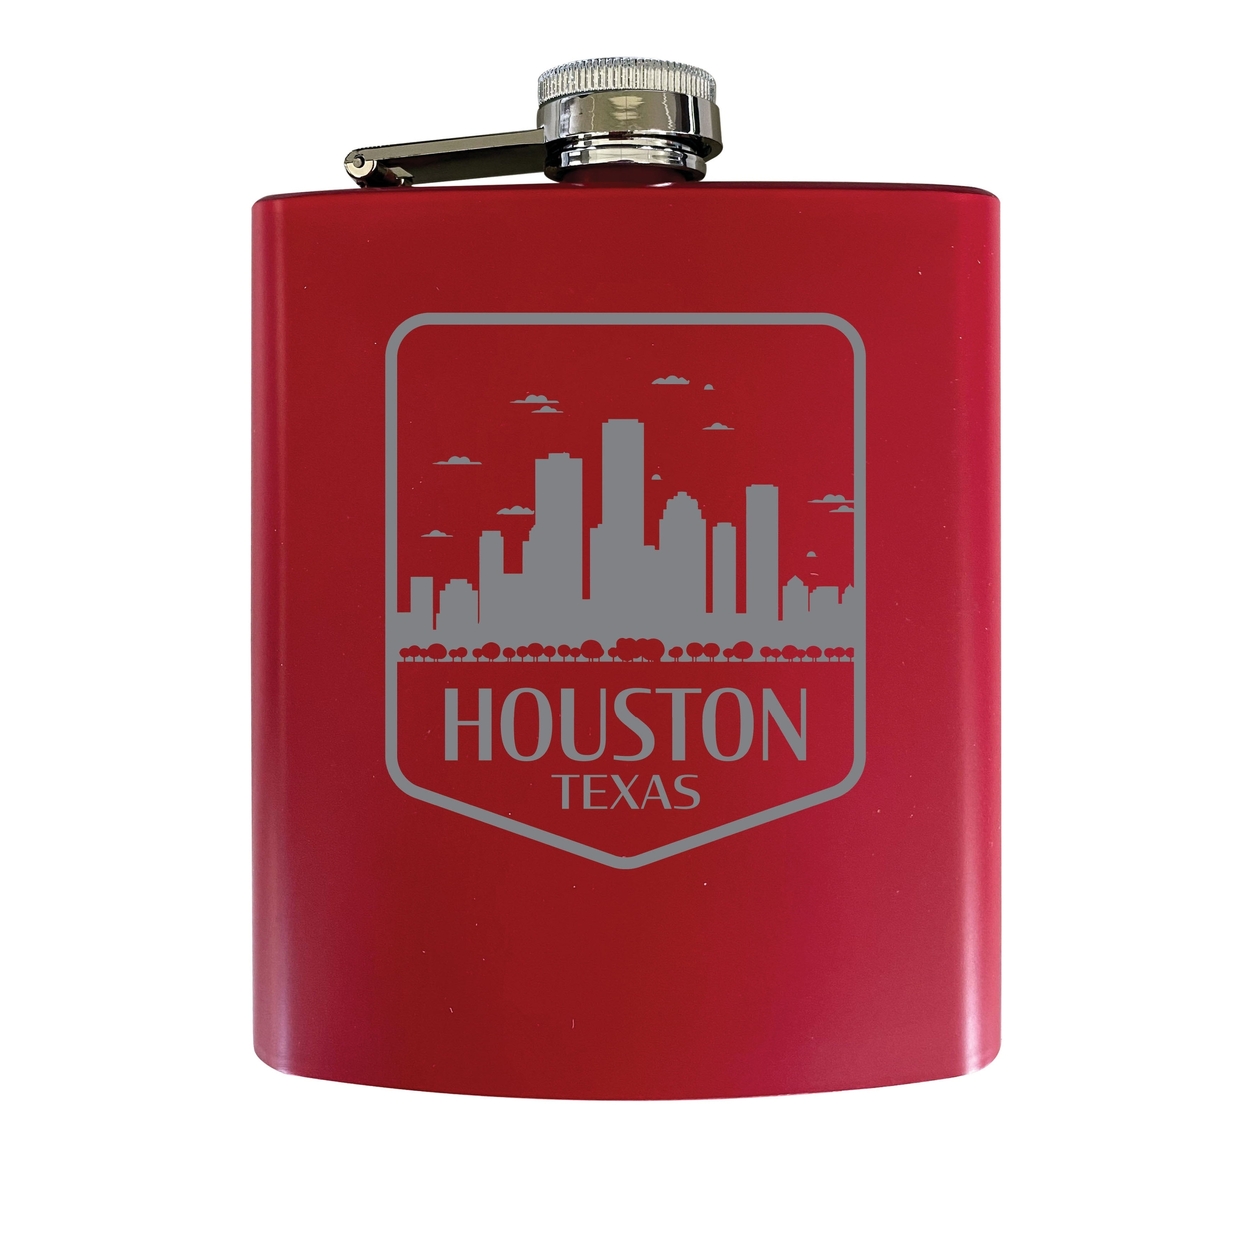 Houston Texas Souvenir 7 Oz Engraved Steel Flask Matte Finish - Navy,,4-Pack